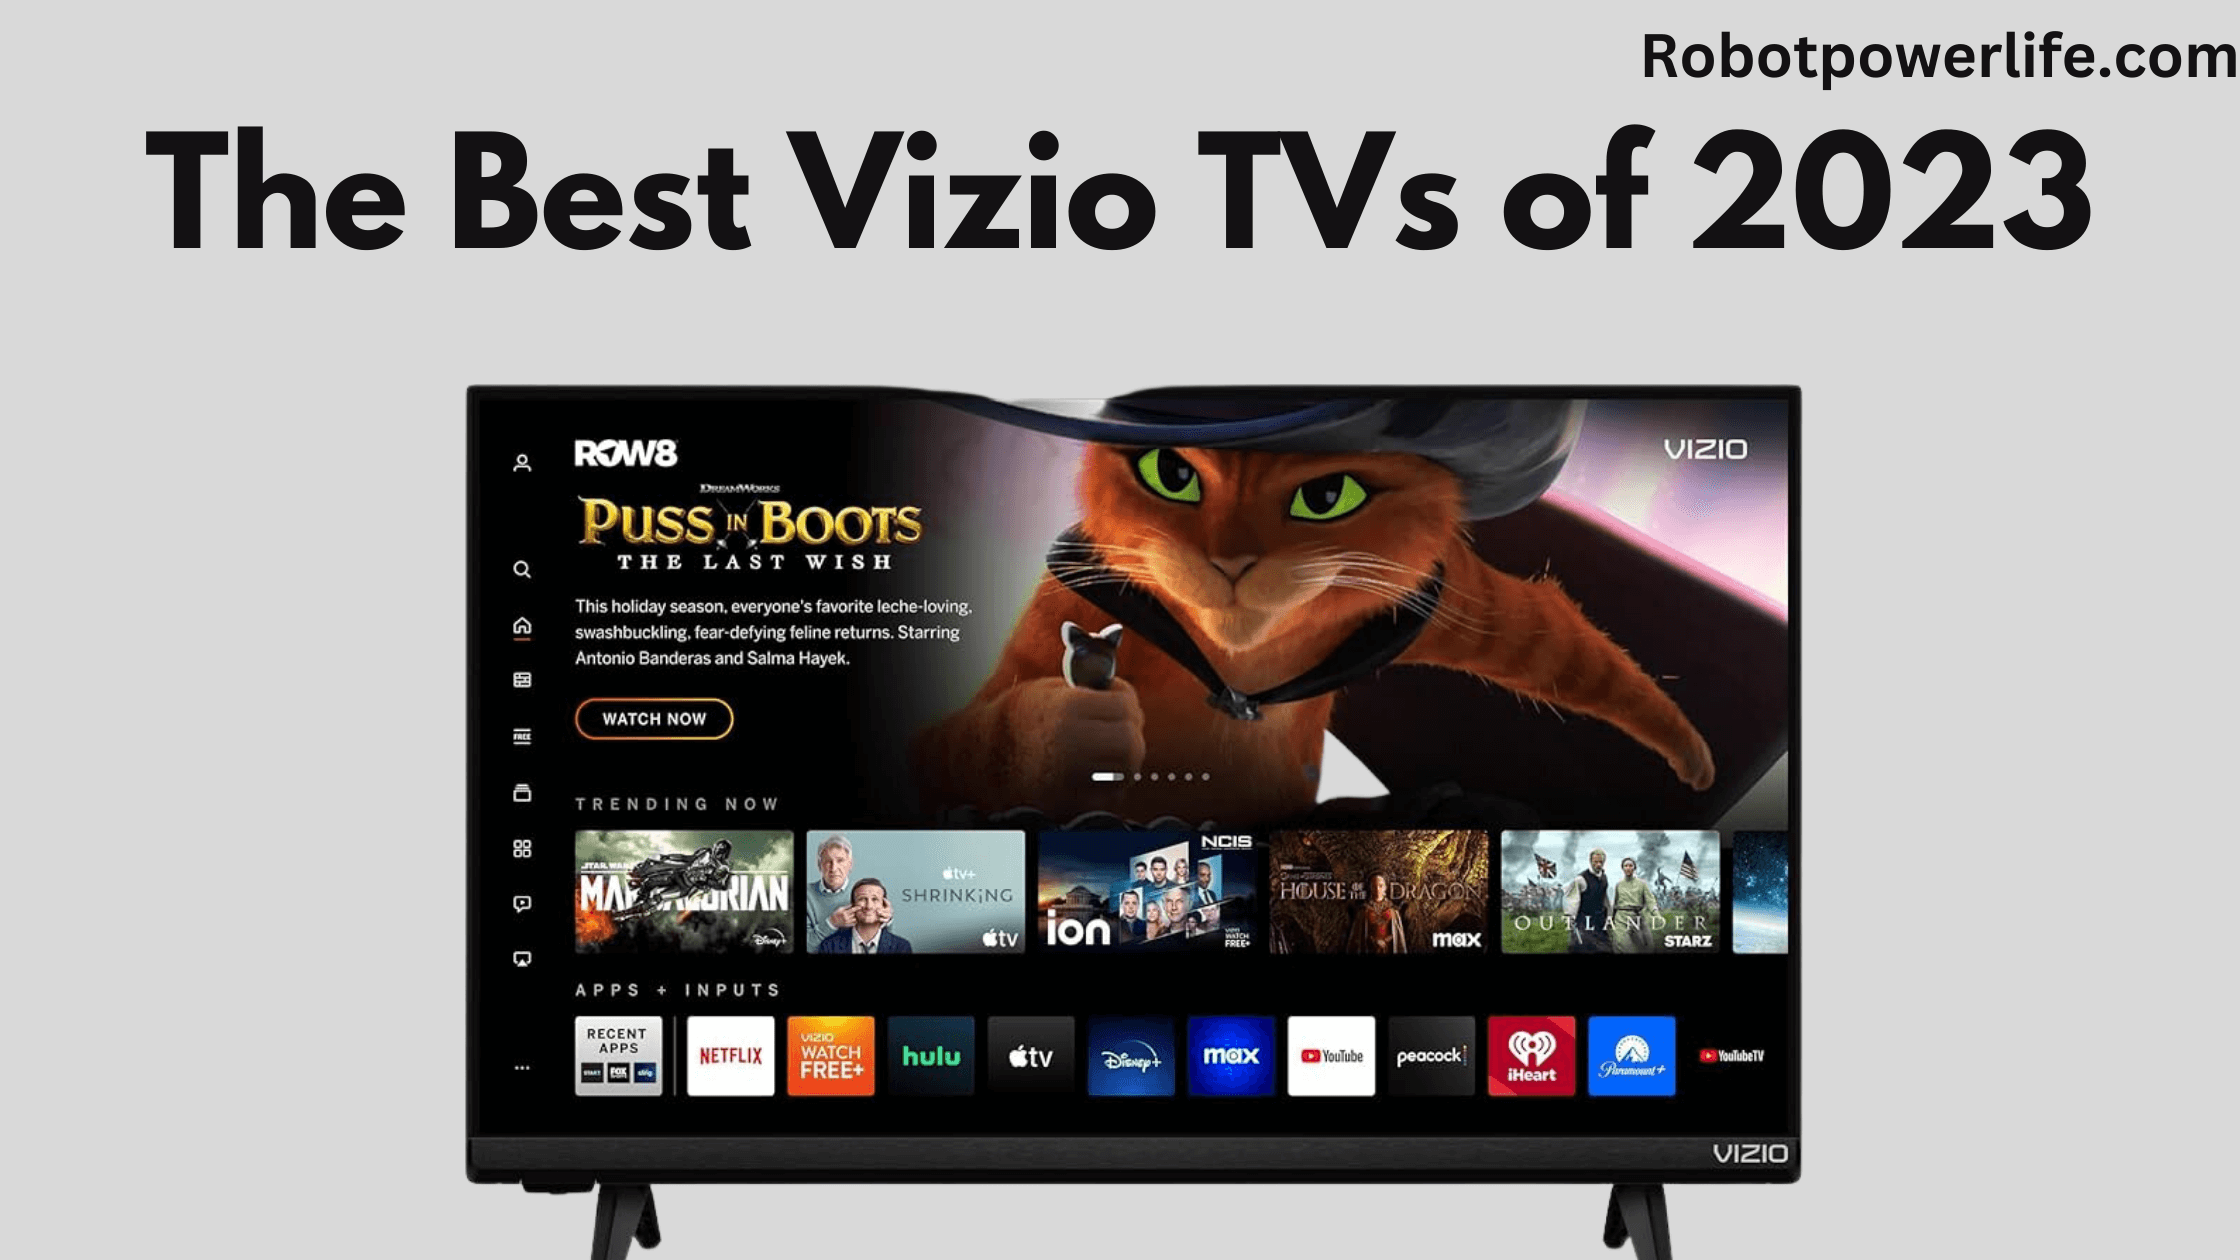 The Best Vizio TVs of 2023